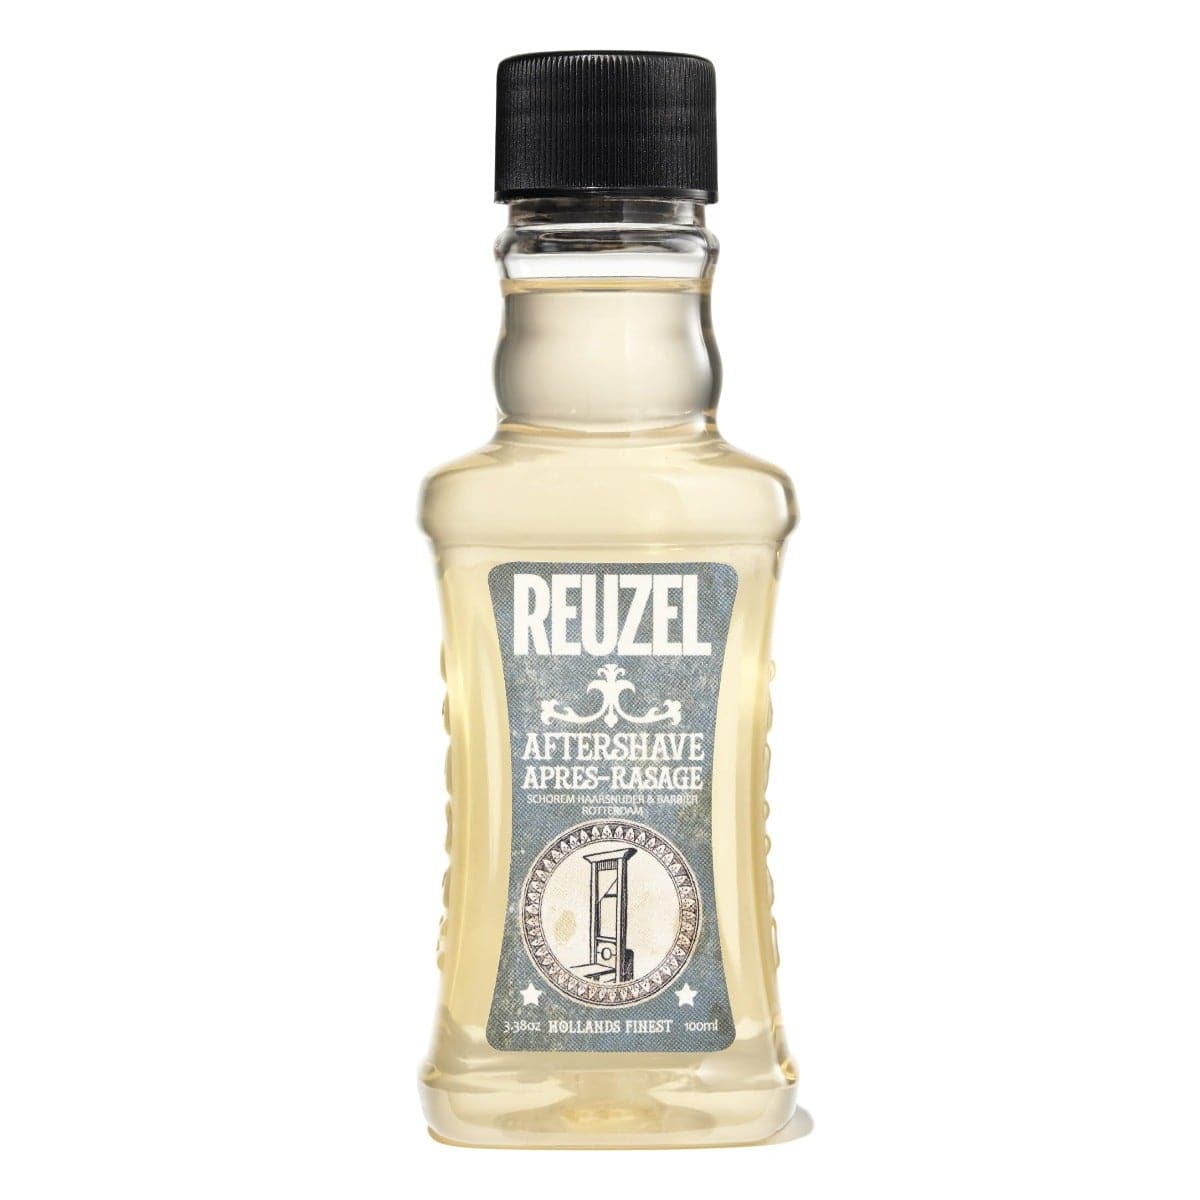 REUZEL_Aftershave - Original Scent_Cosmetic World